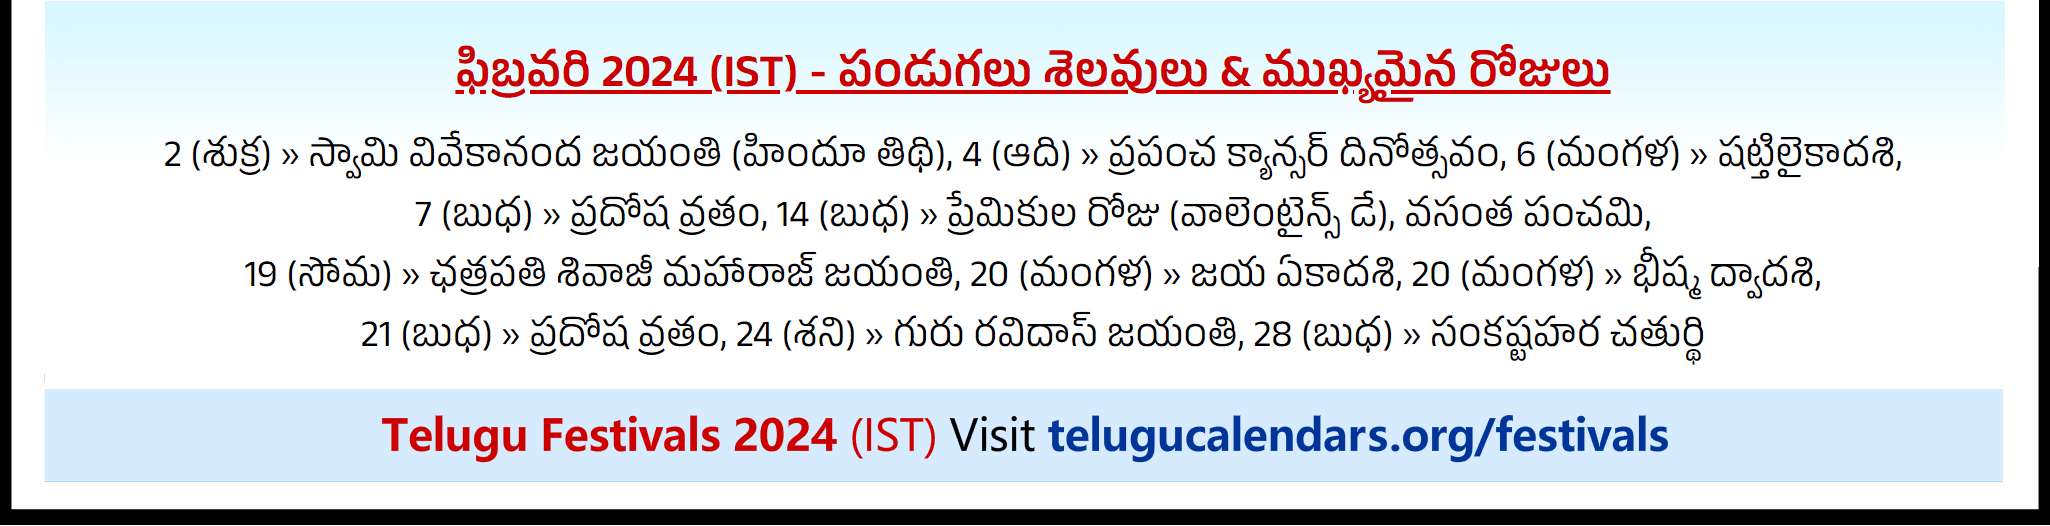 Telugu Festivals 2024 February Phoenix